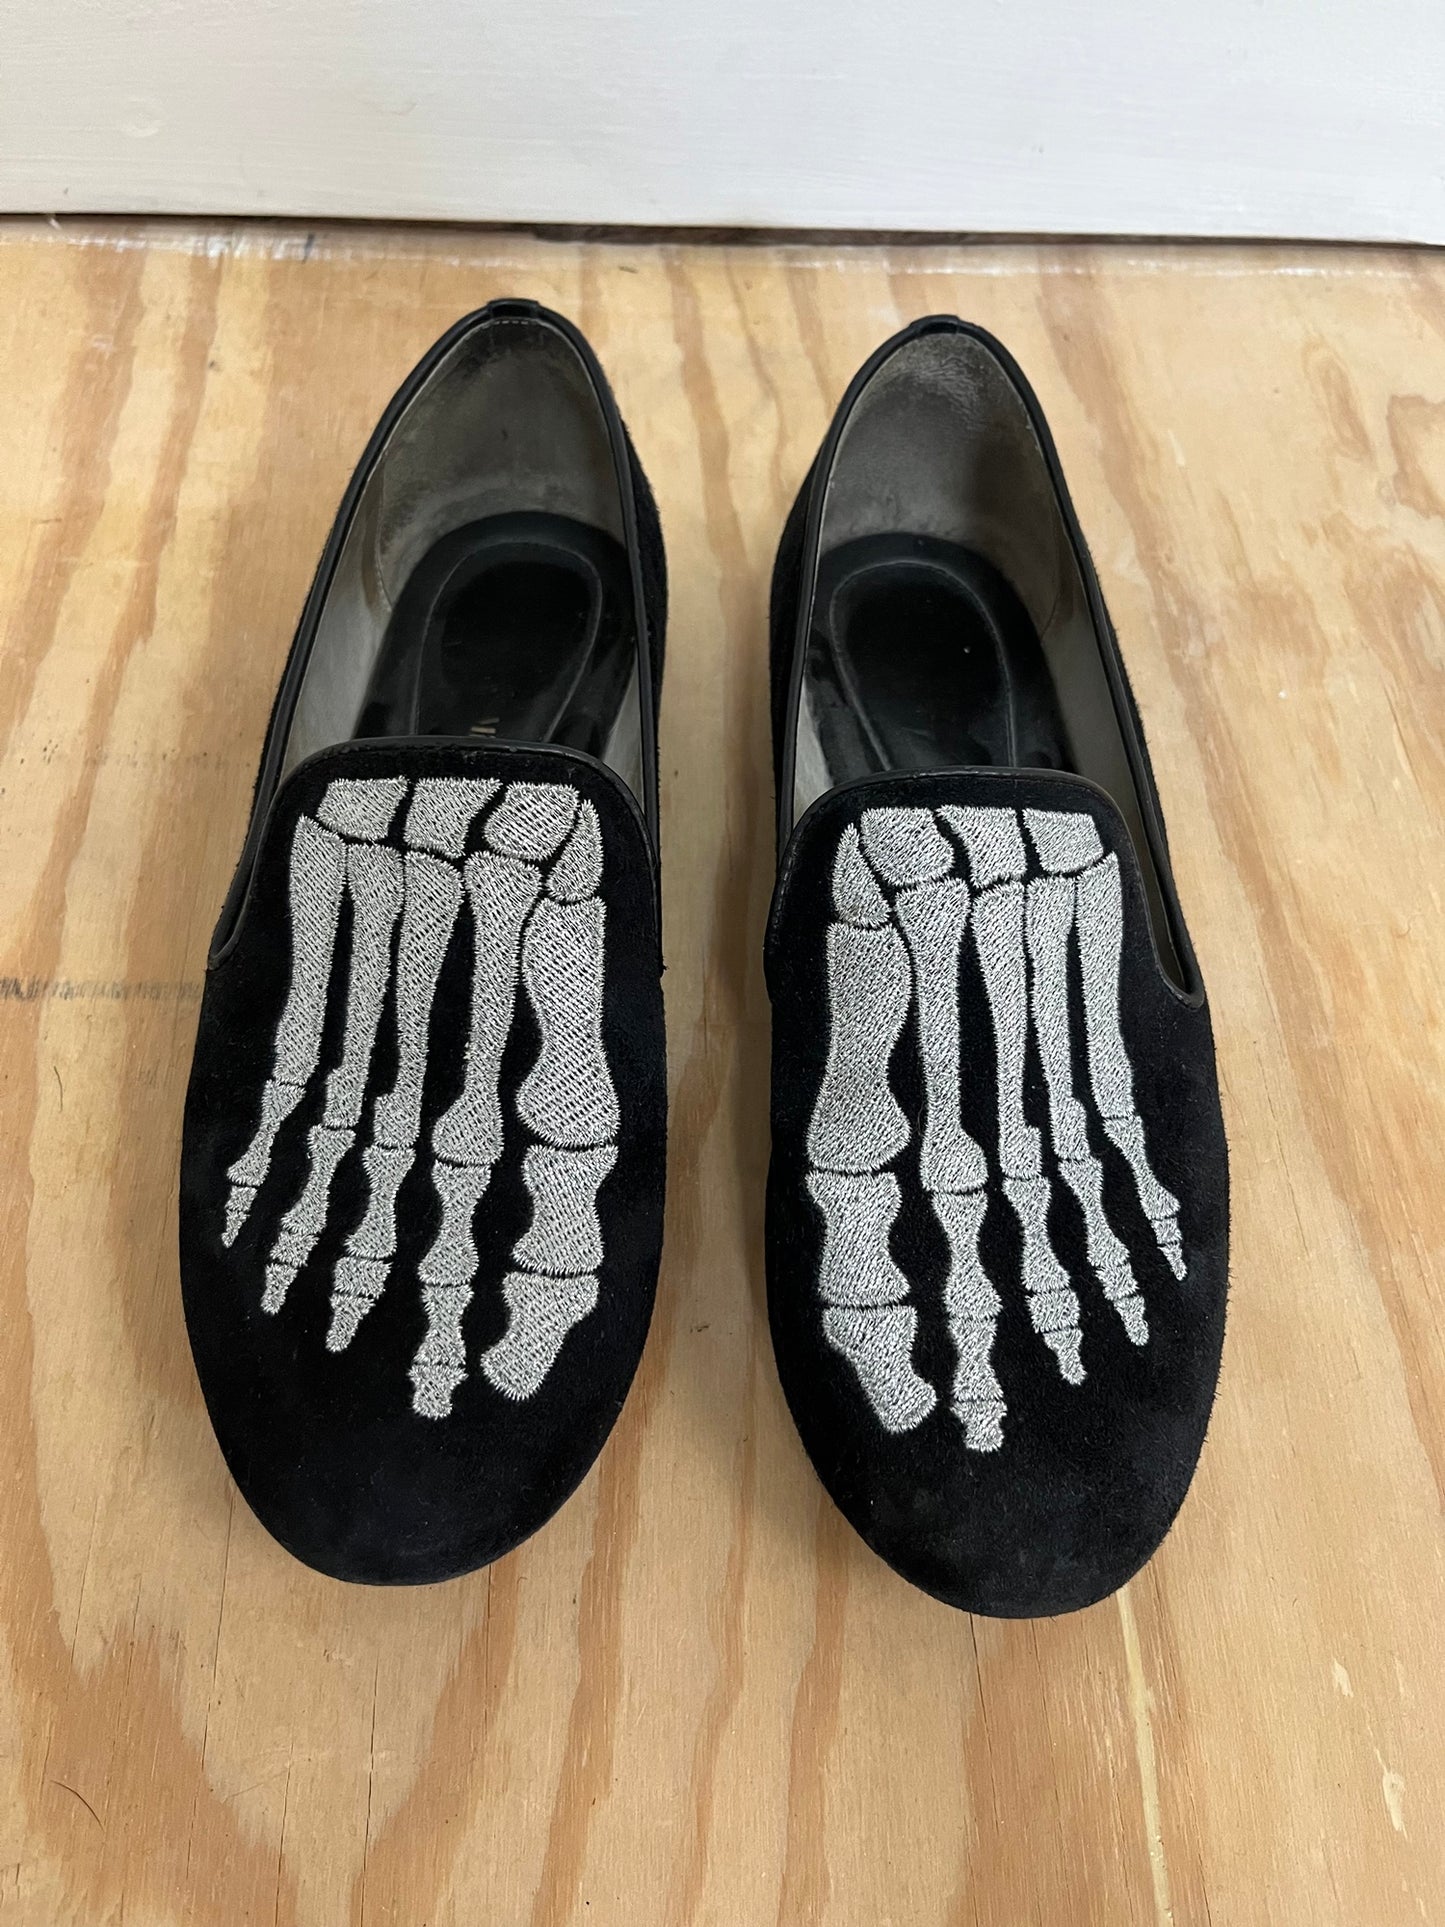 Skeleton Loafers Size 7.5